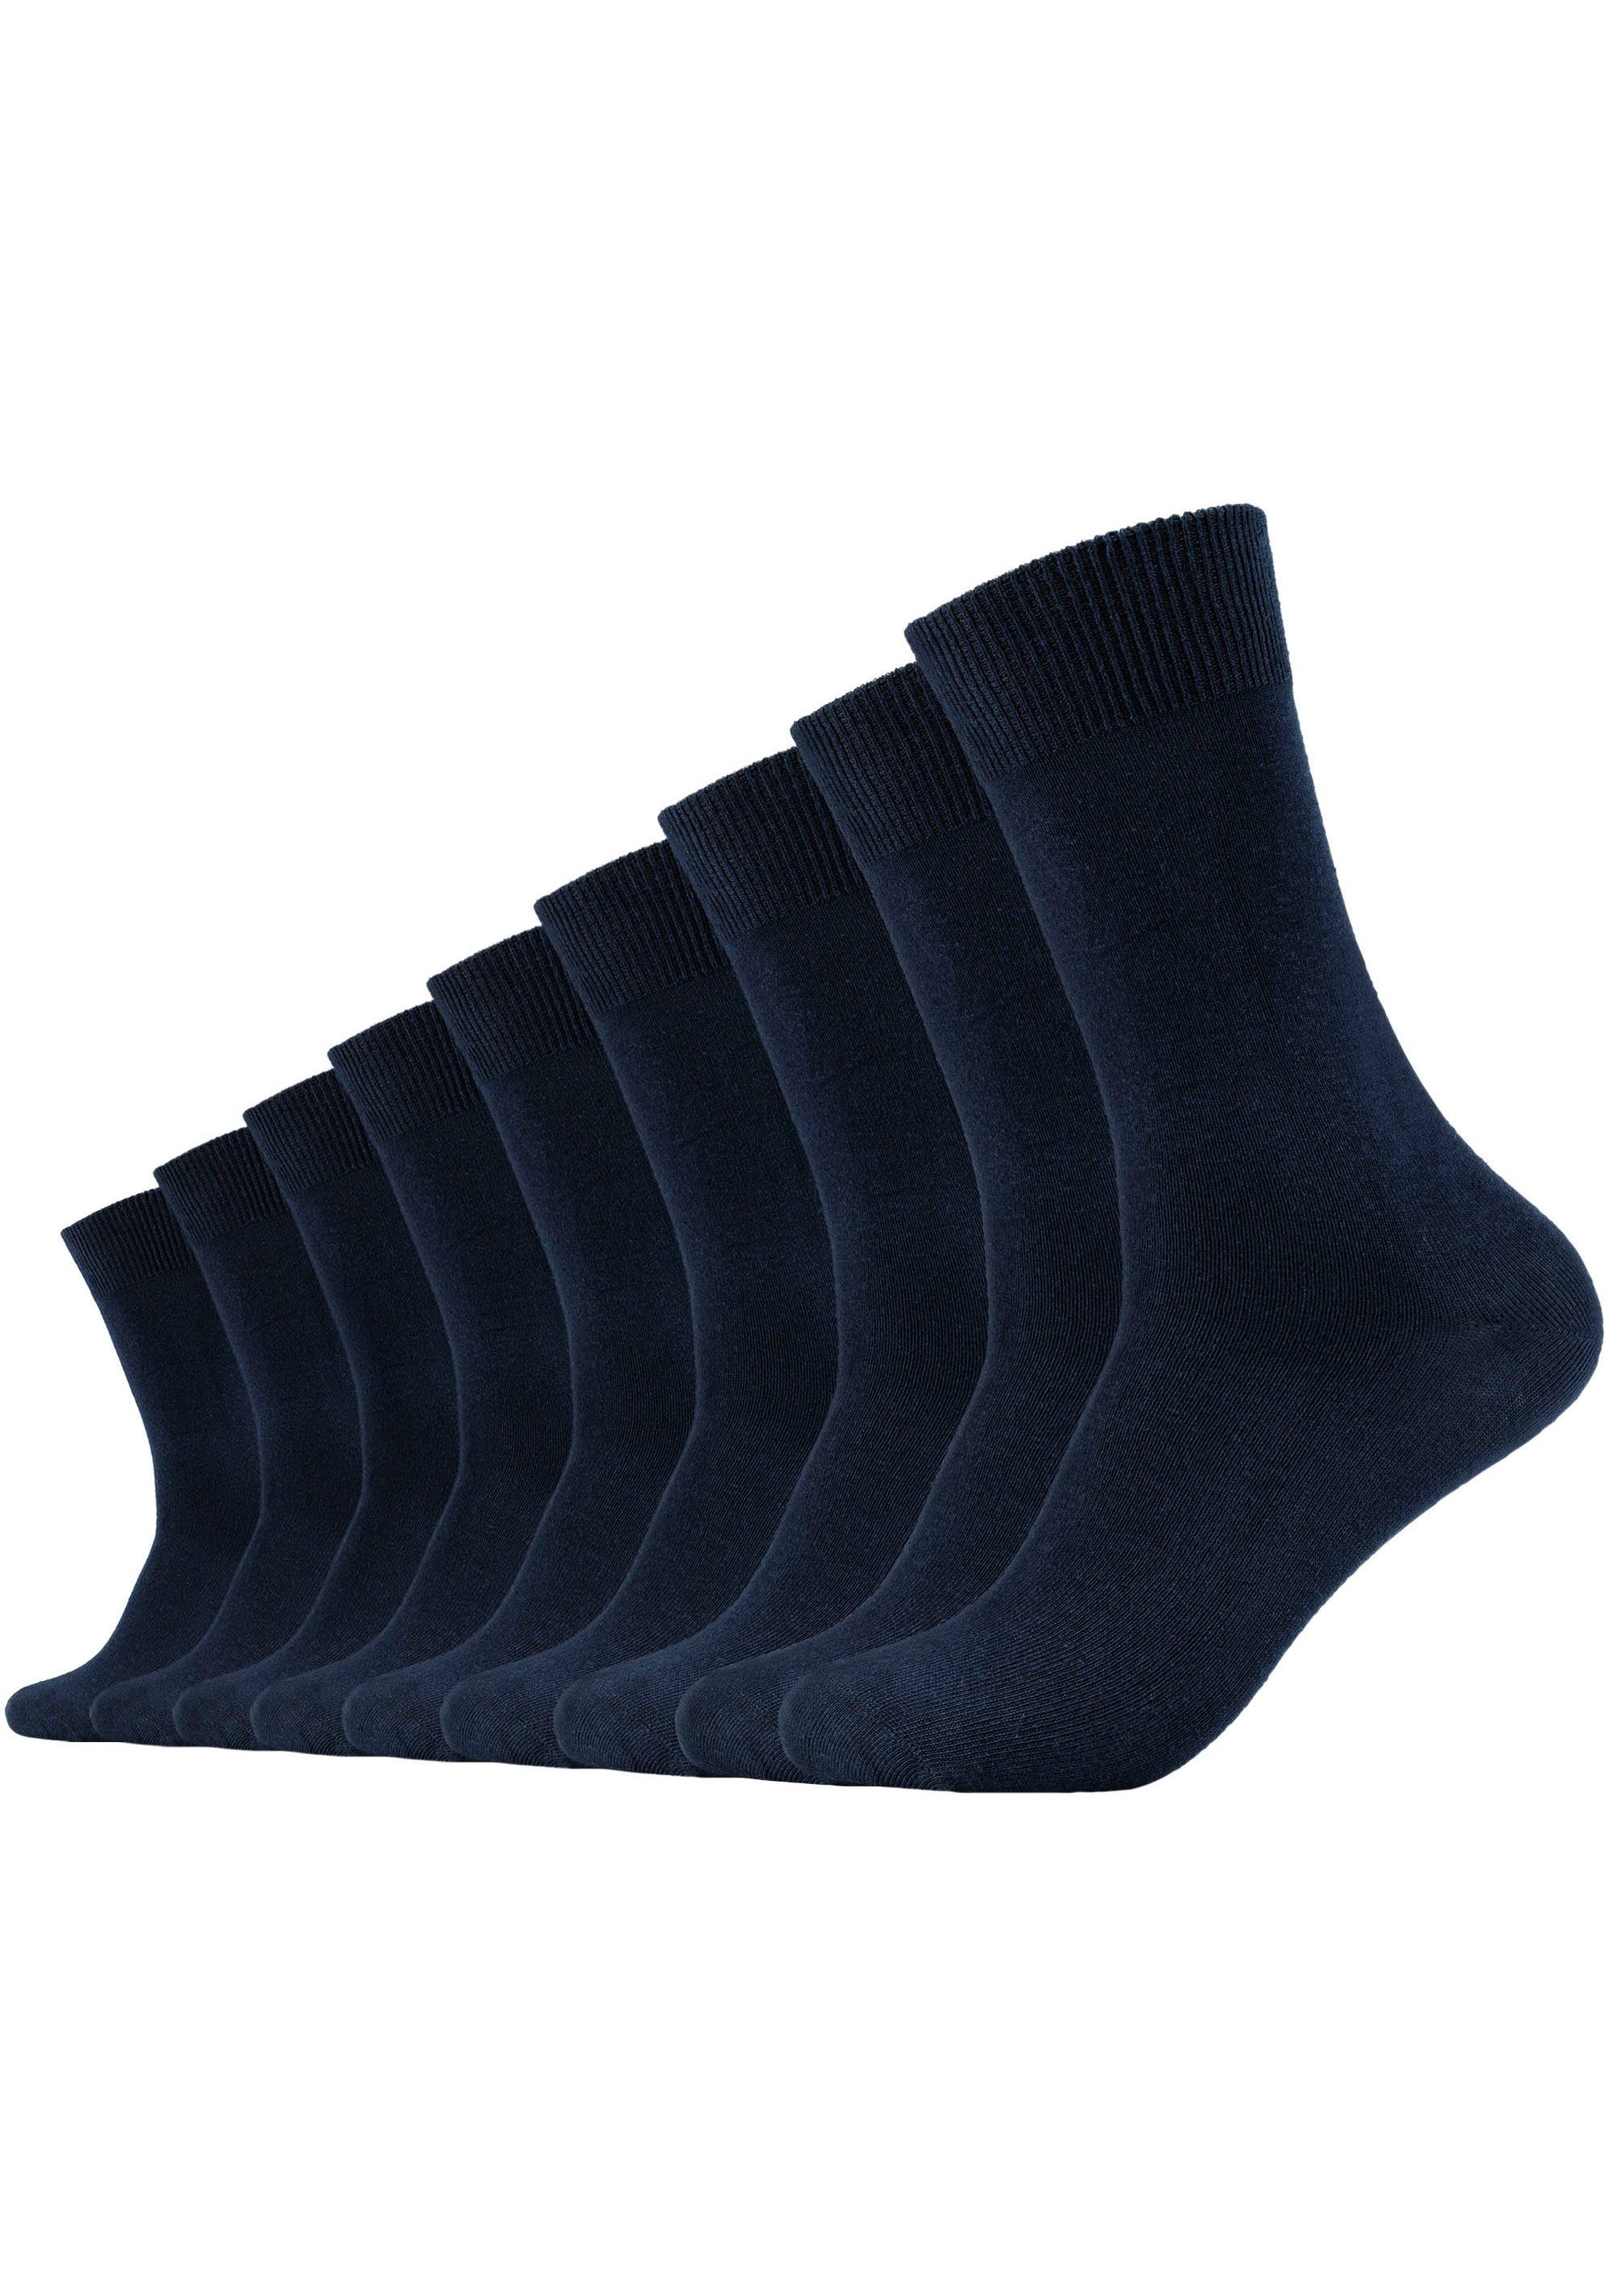 Zehenbereich navy Camano verstärkter und Langlebig: Fersen- 9-Paar) Socken (Packung,